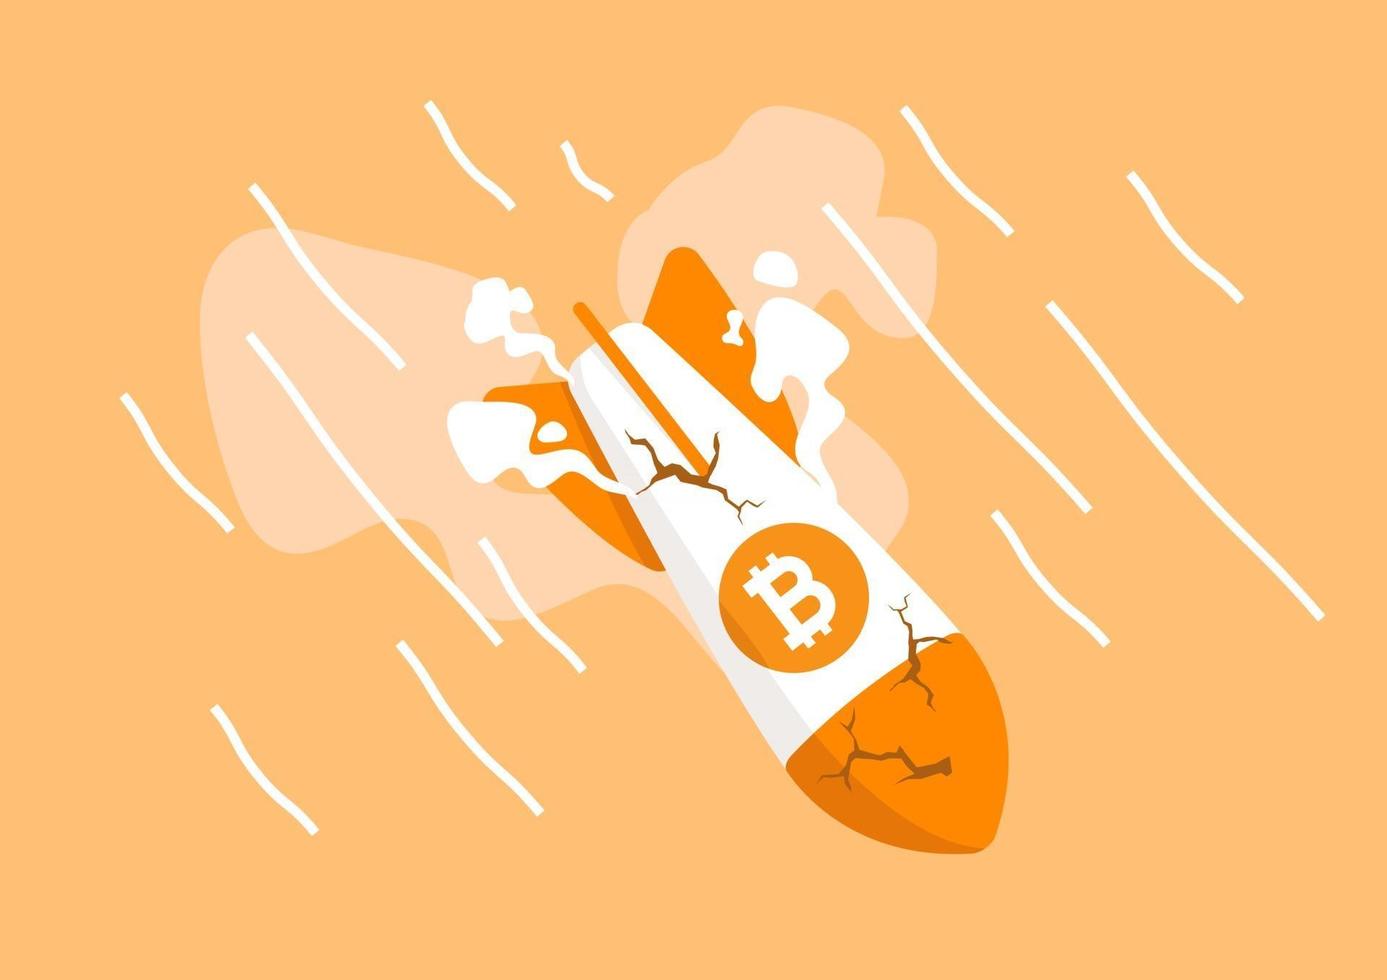 Bitcoin-Raketenabsturz fliegt nach Bitcoin-Preisverfall vektor